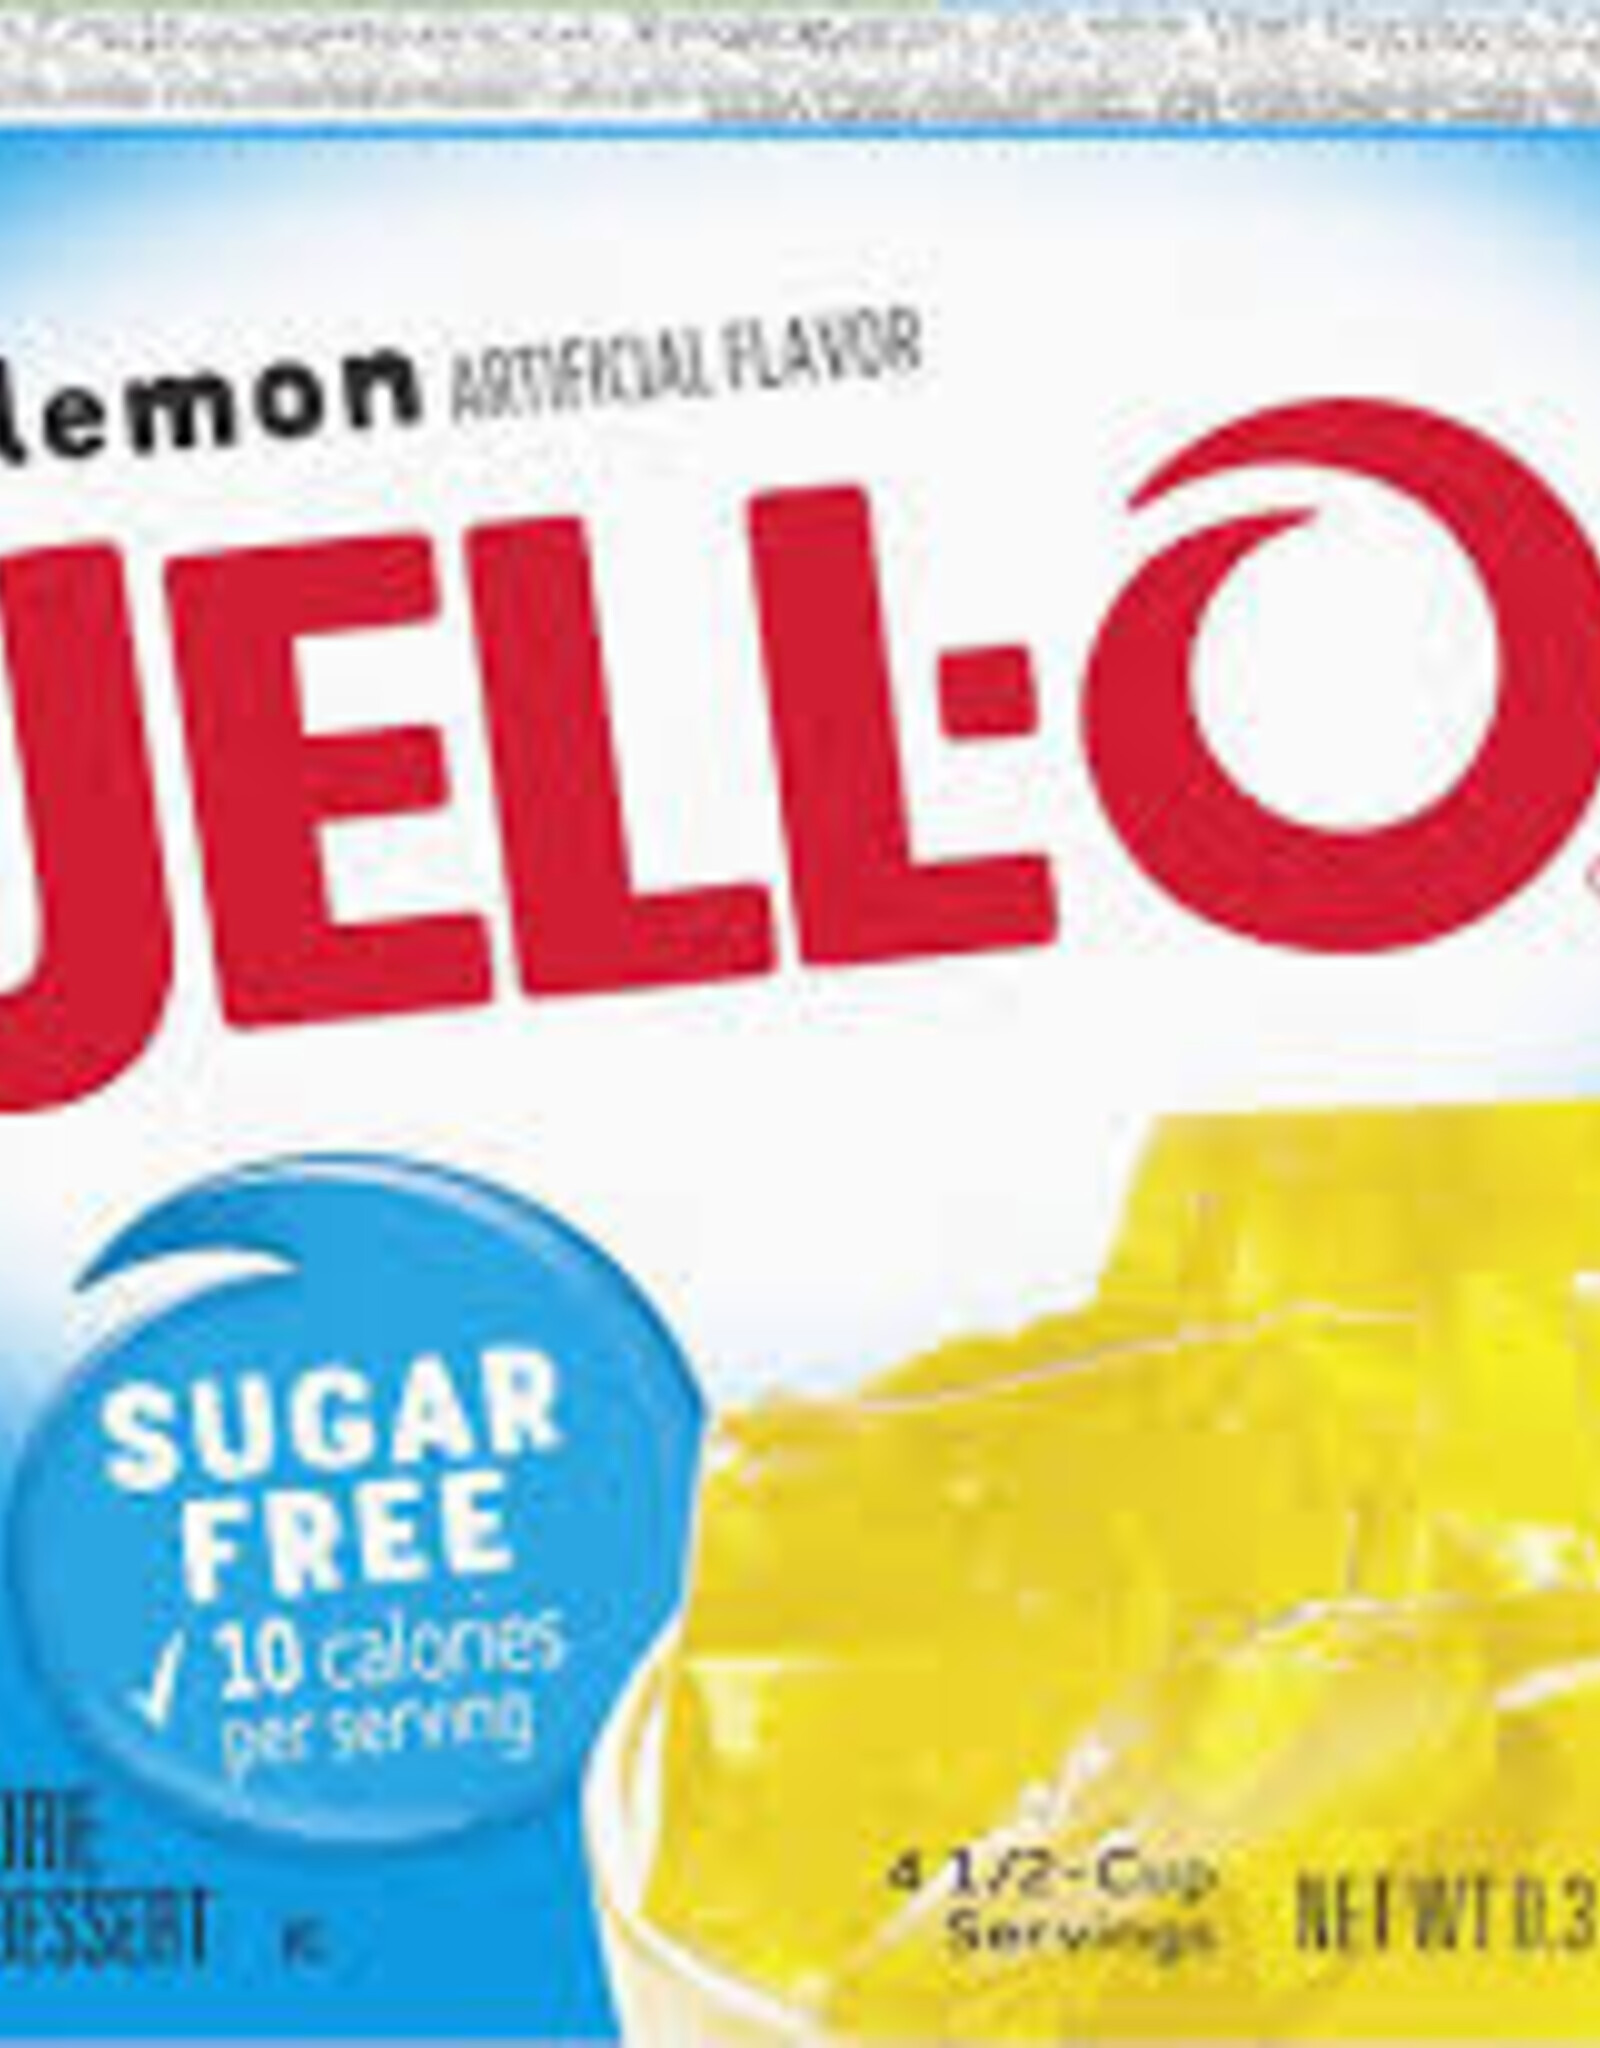 Jello Jello Gelatin Mix Lemon 8.5g